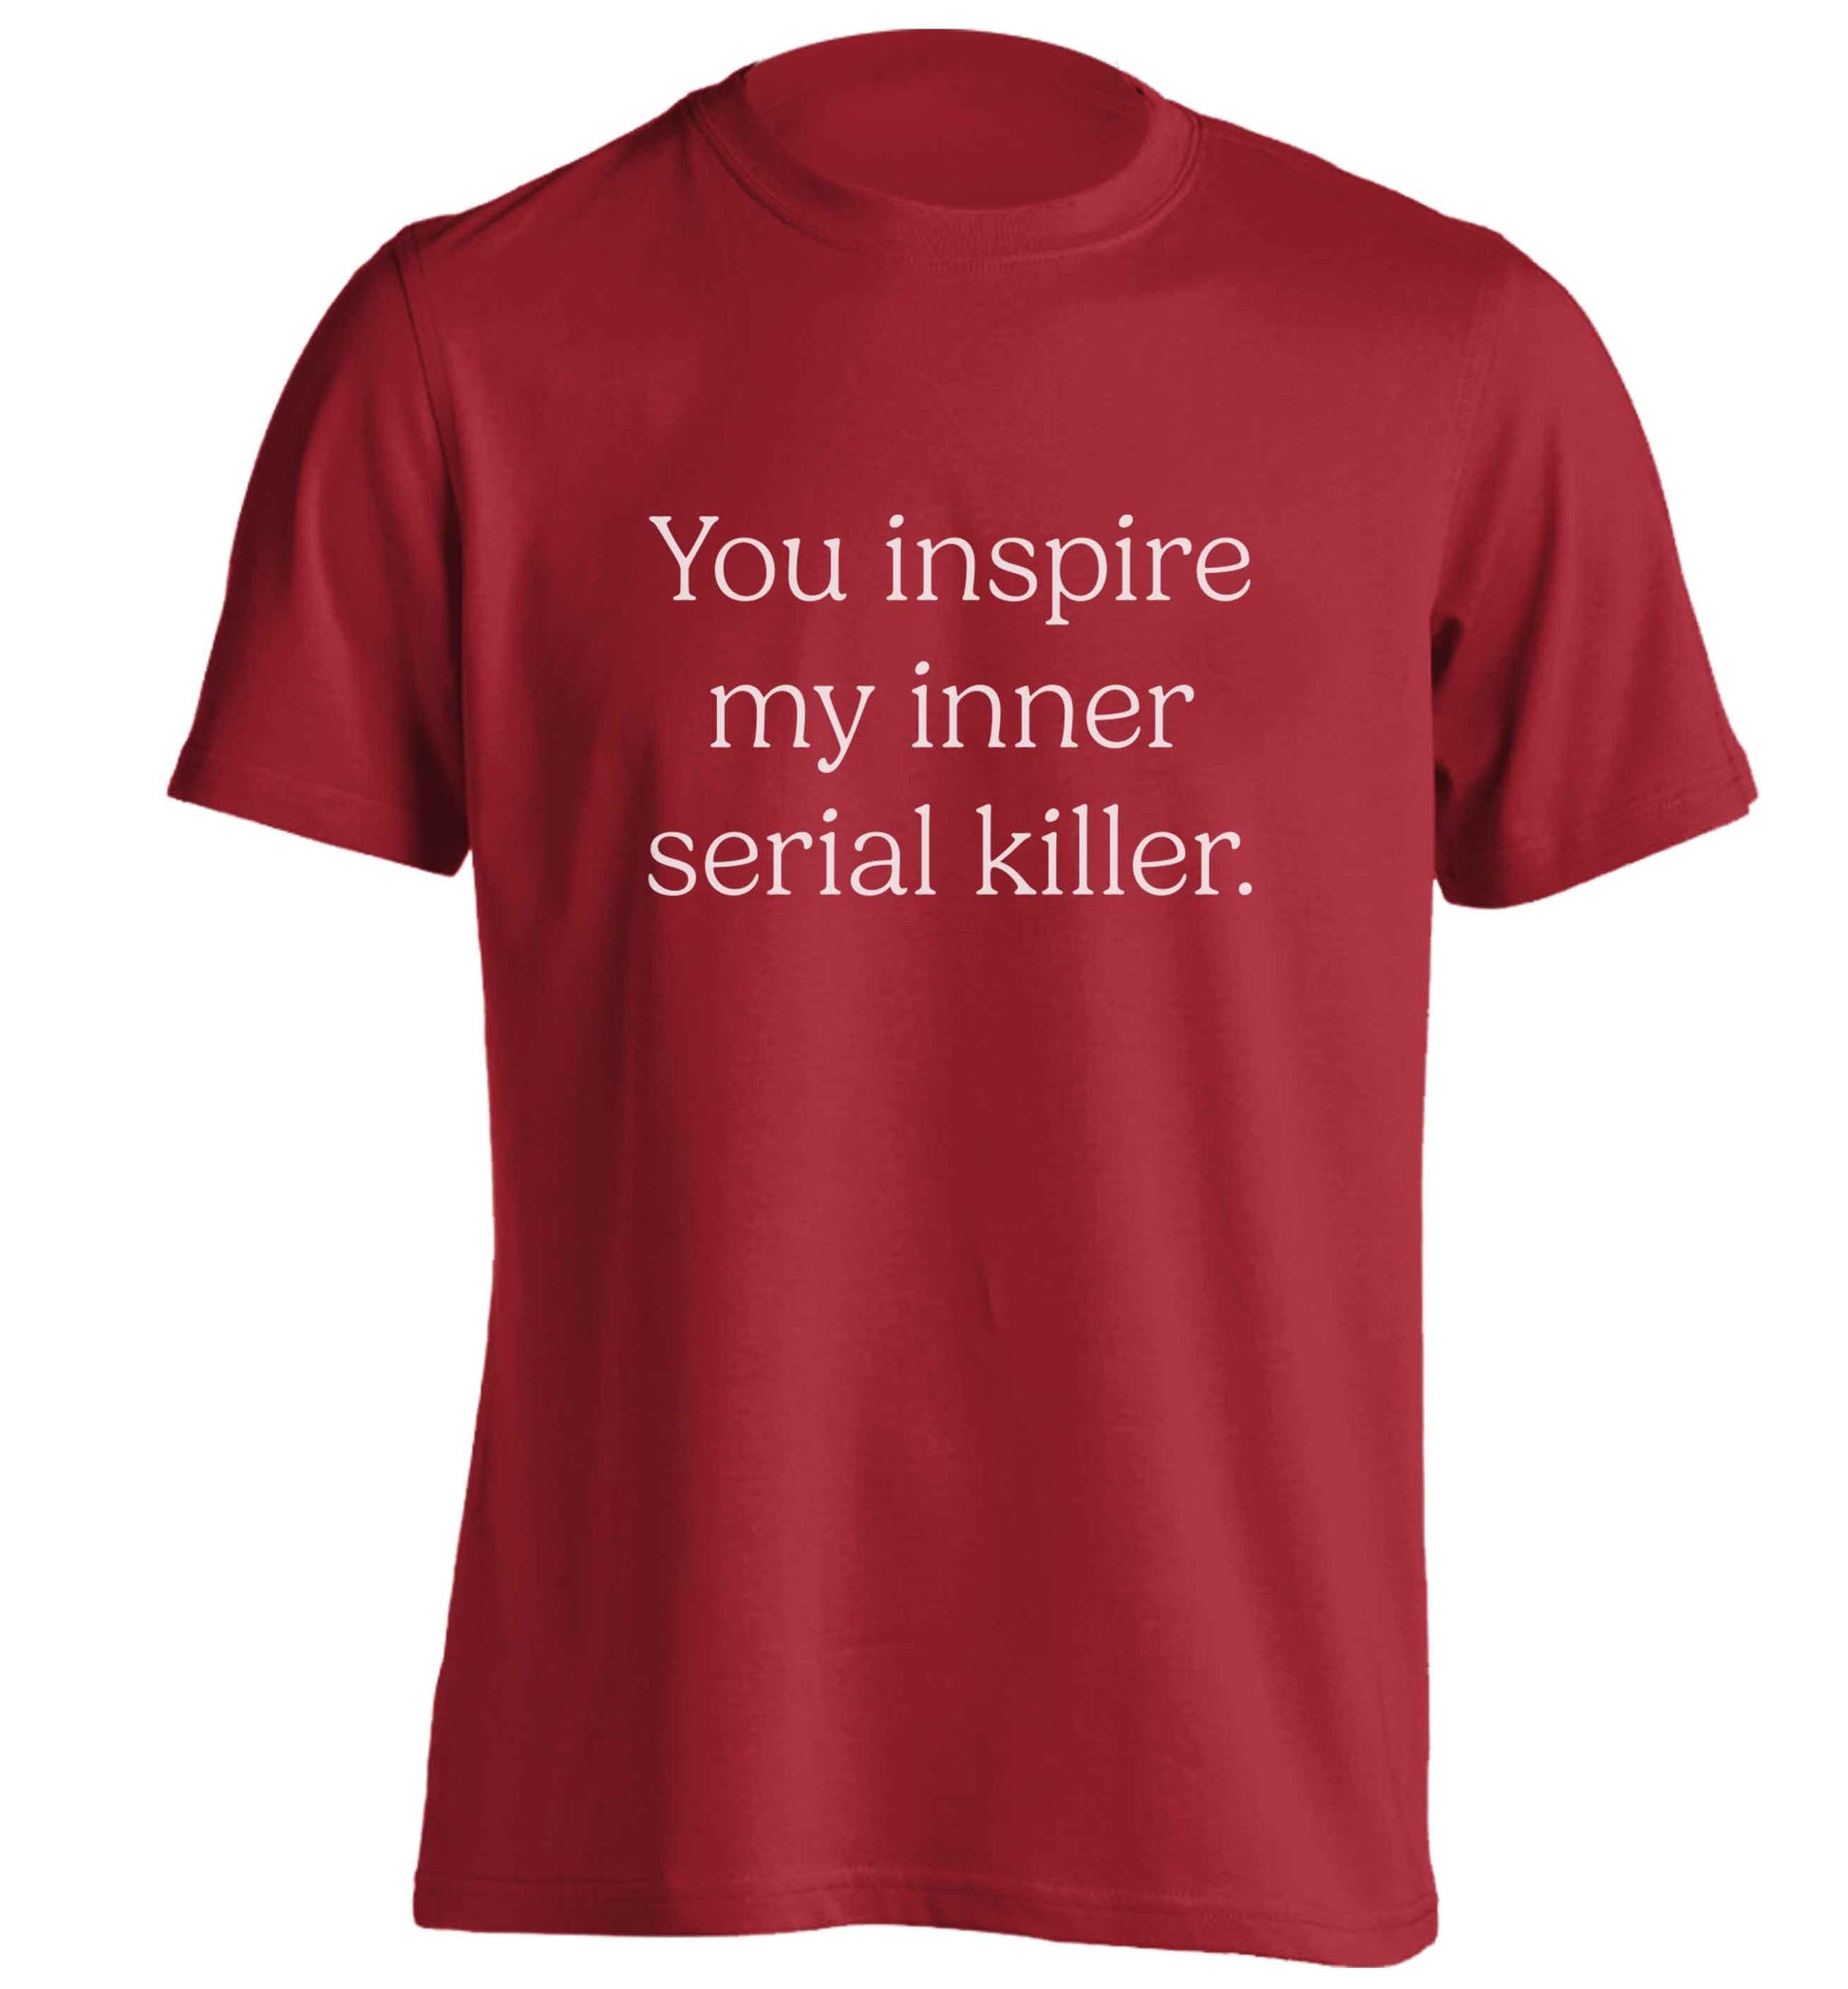 You inspire my inner serial killer Kit adults unisex red Tshirt 2XL